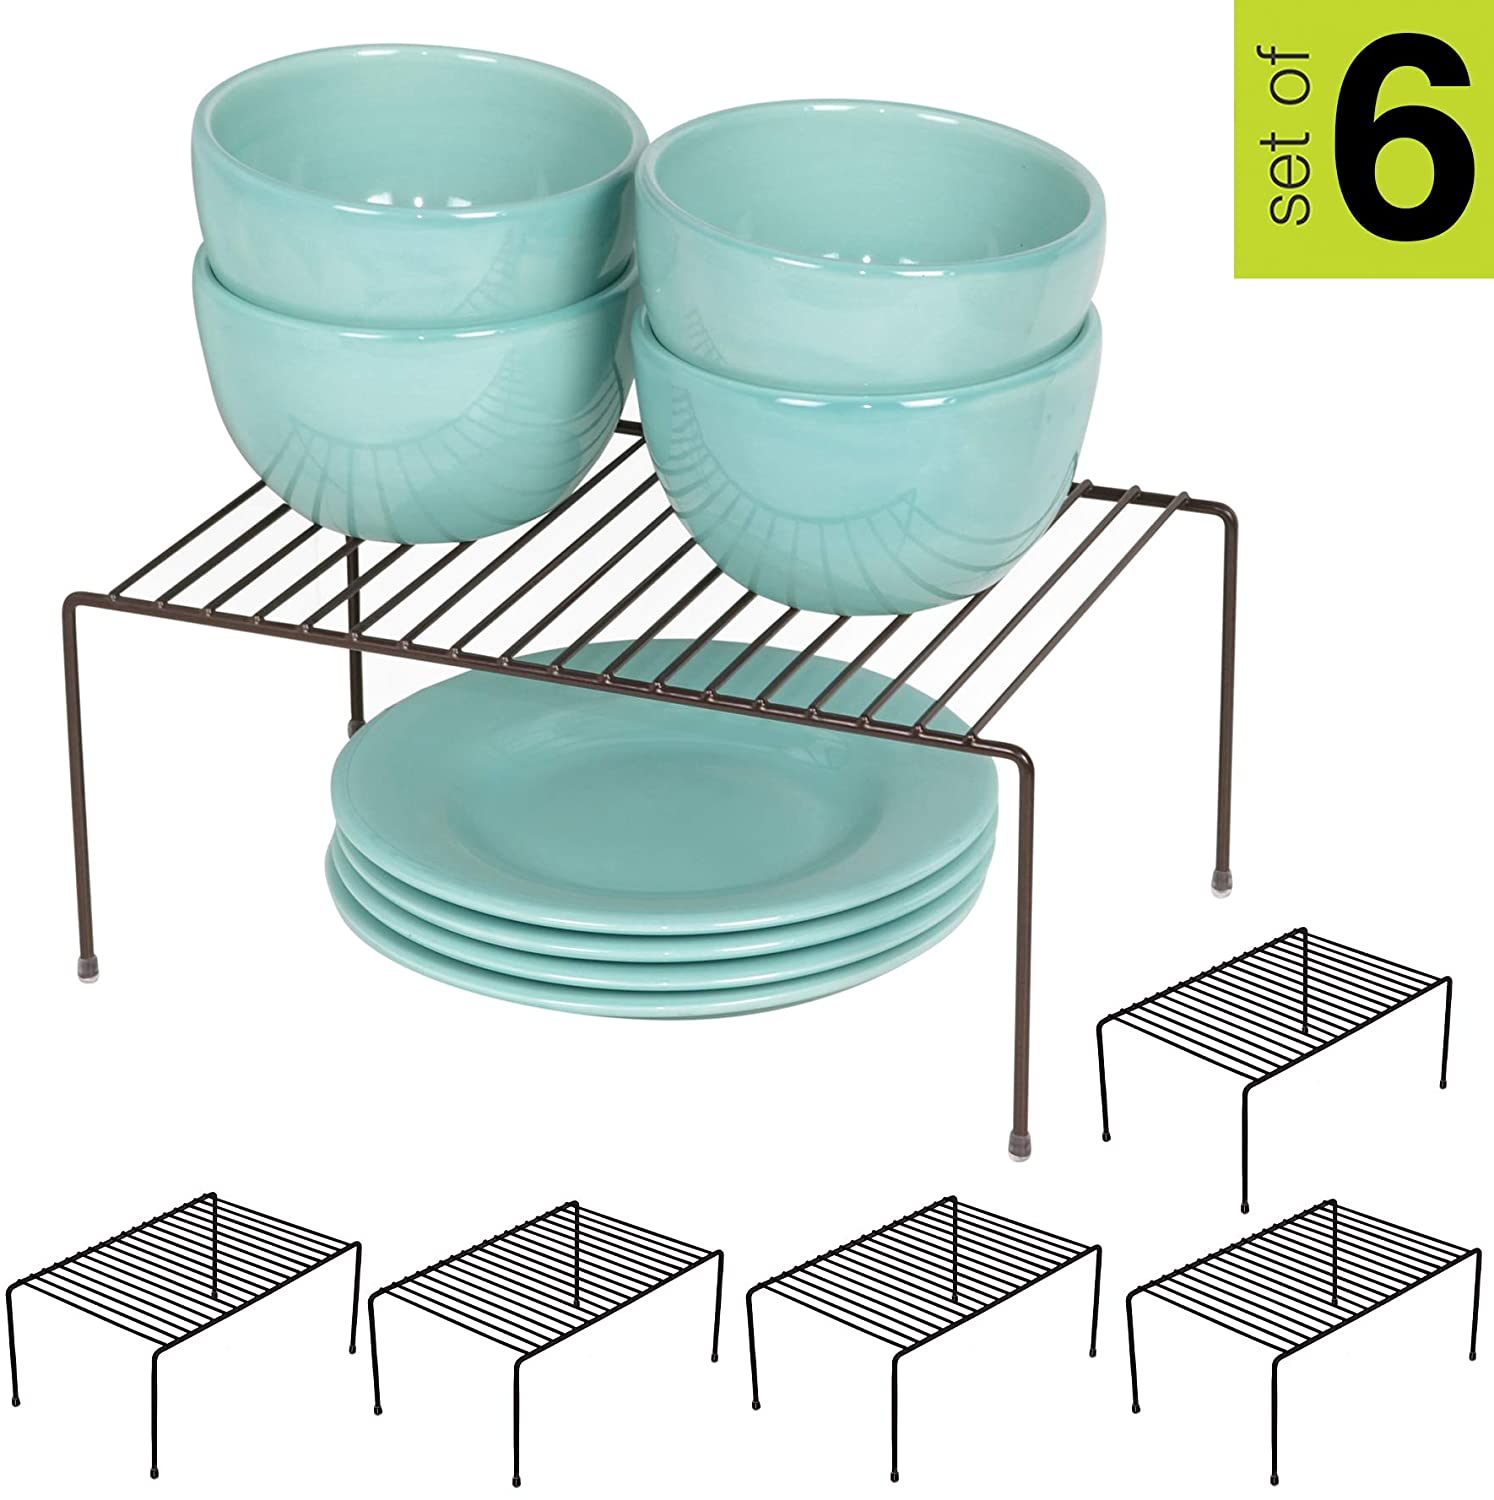 Smart Design Cabinet Storage Shelf Rack - Medium (8.5 x 13.25 Inch) - Non-Slip Feet - Steel Metal Frame - Rust Resistant Coating - Dish, Counter & Pantry Organization - Kitchen [Bronze] - Set of 6